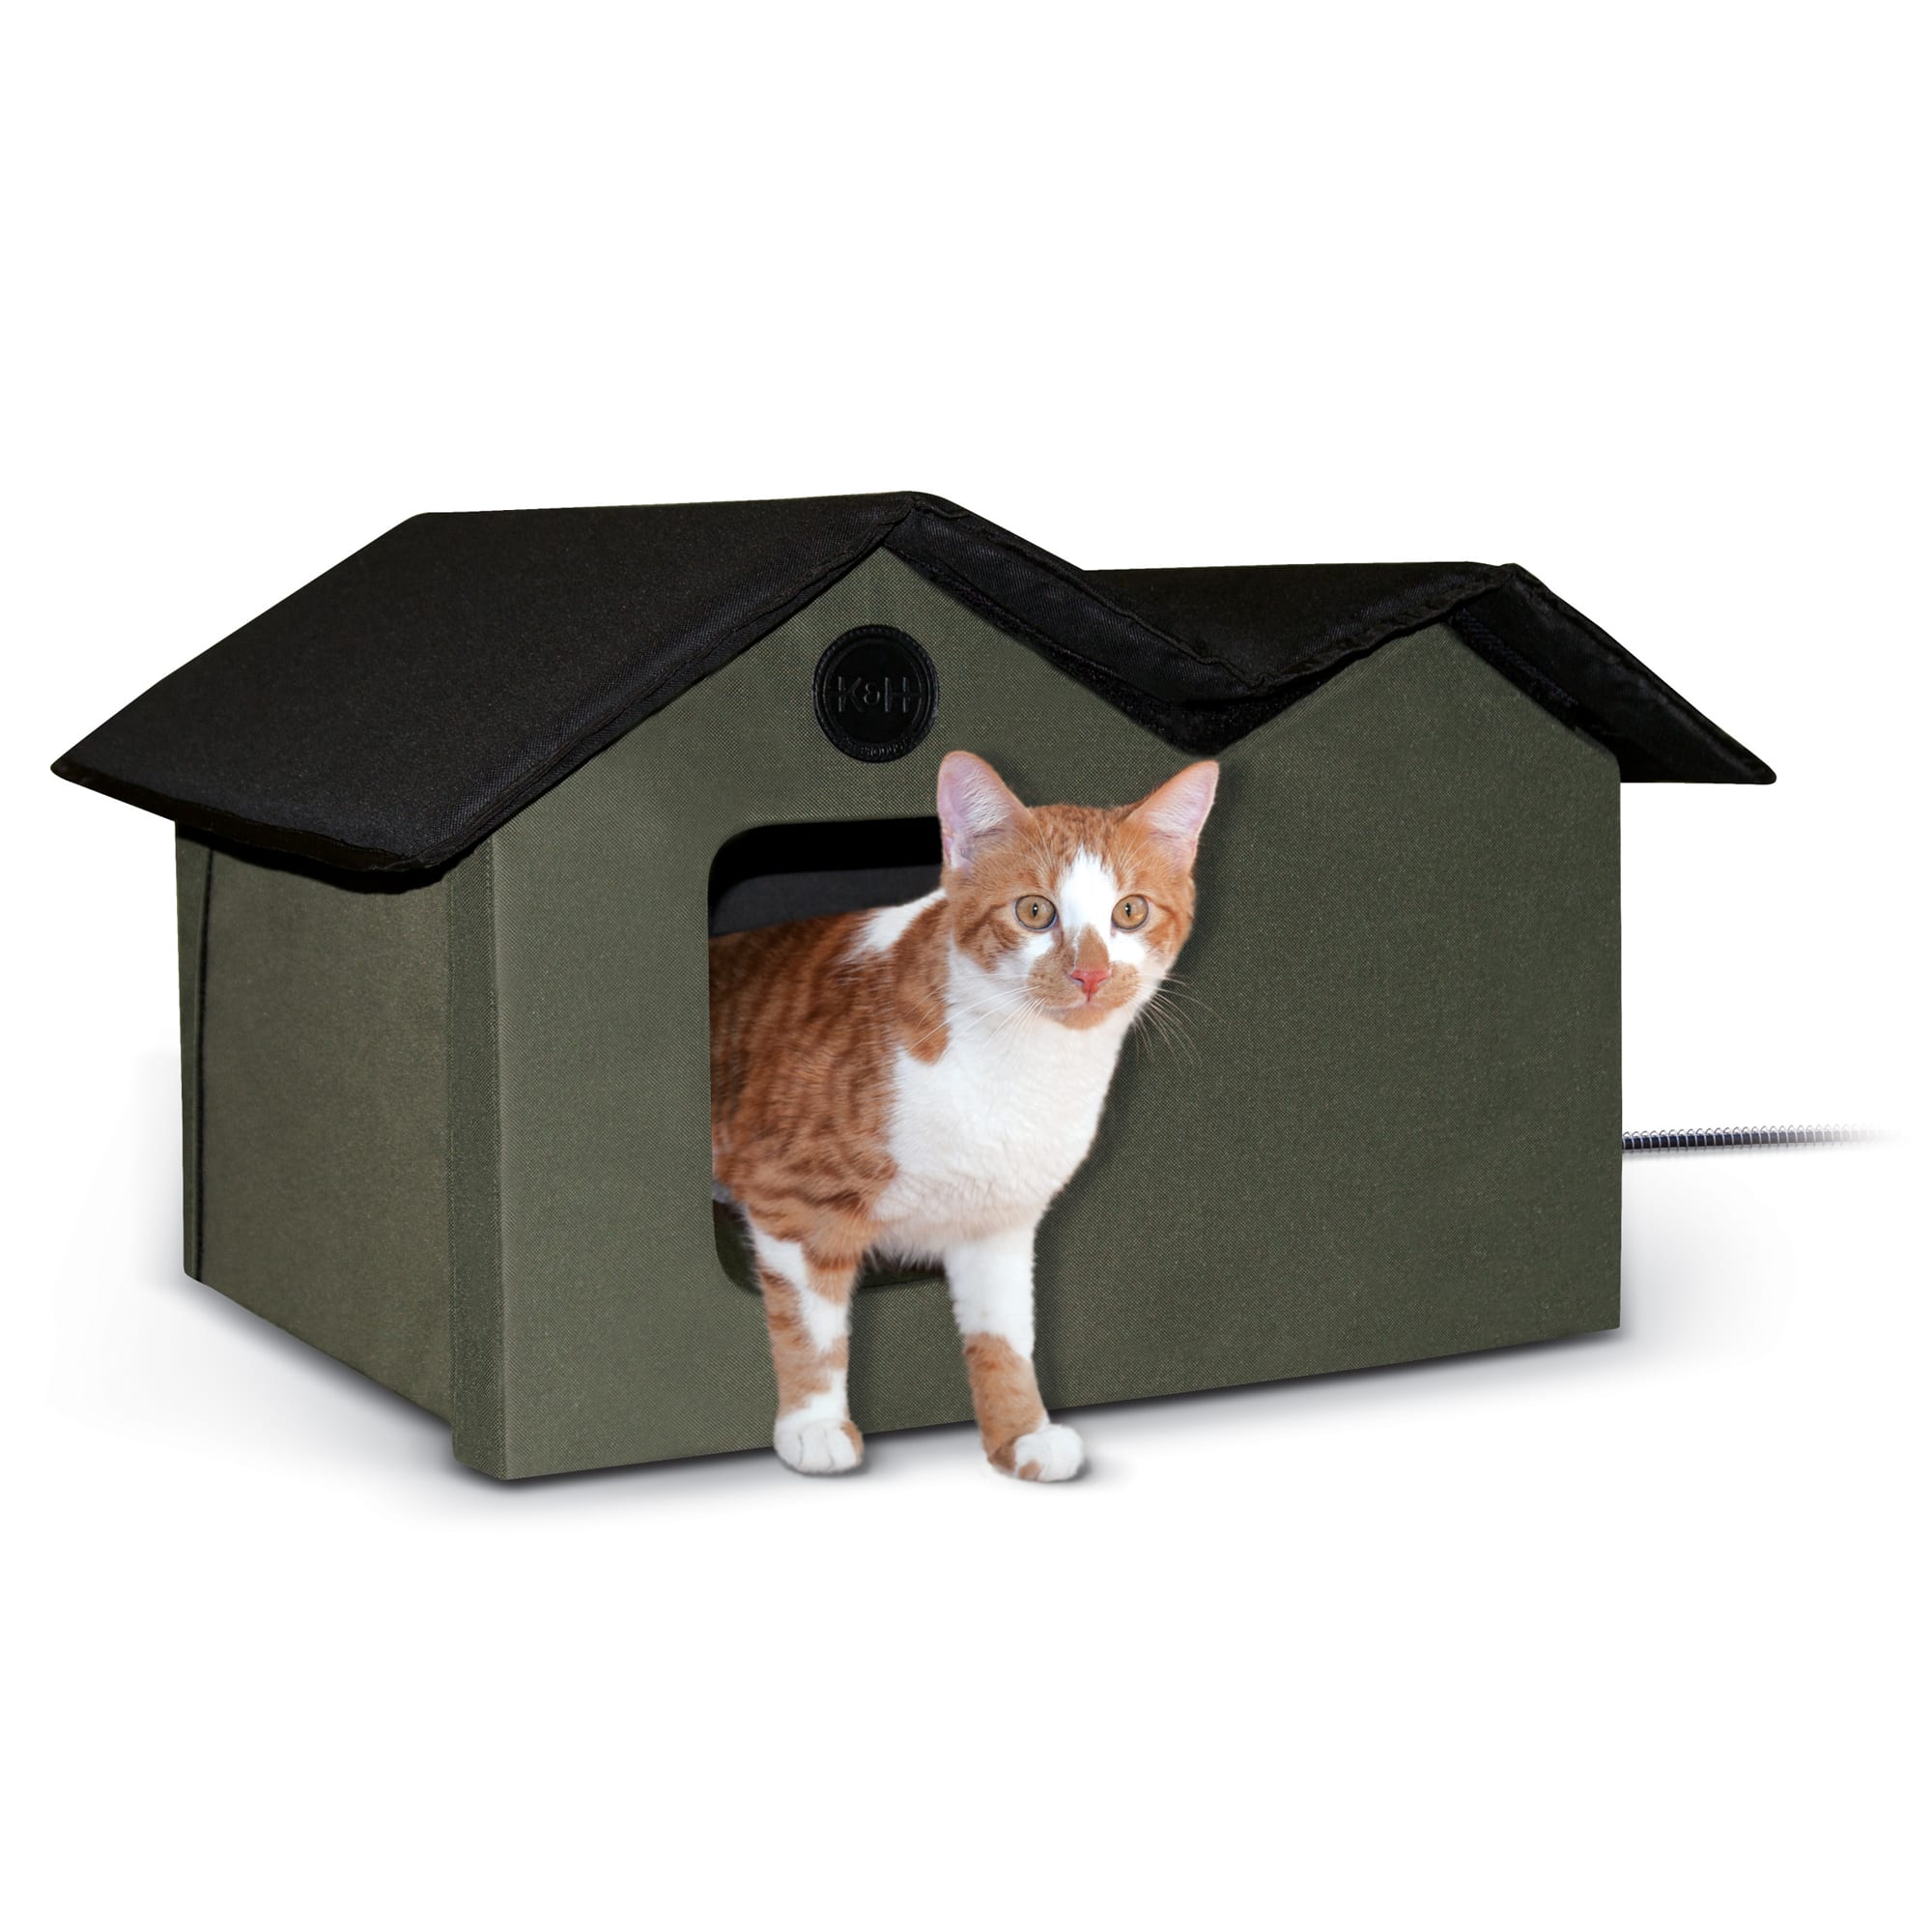 heated cat house